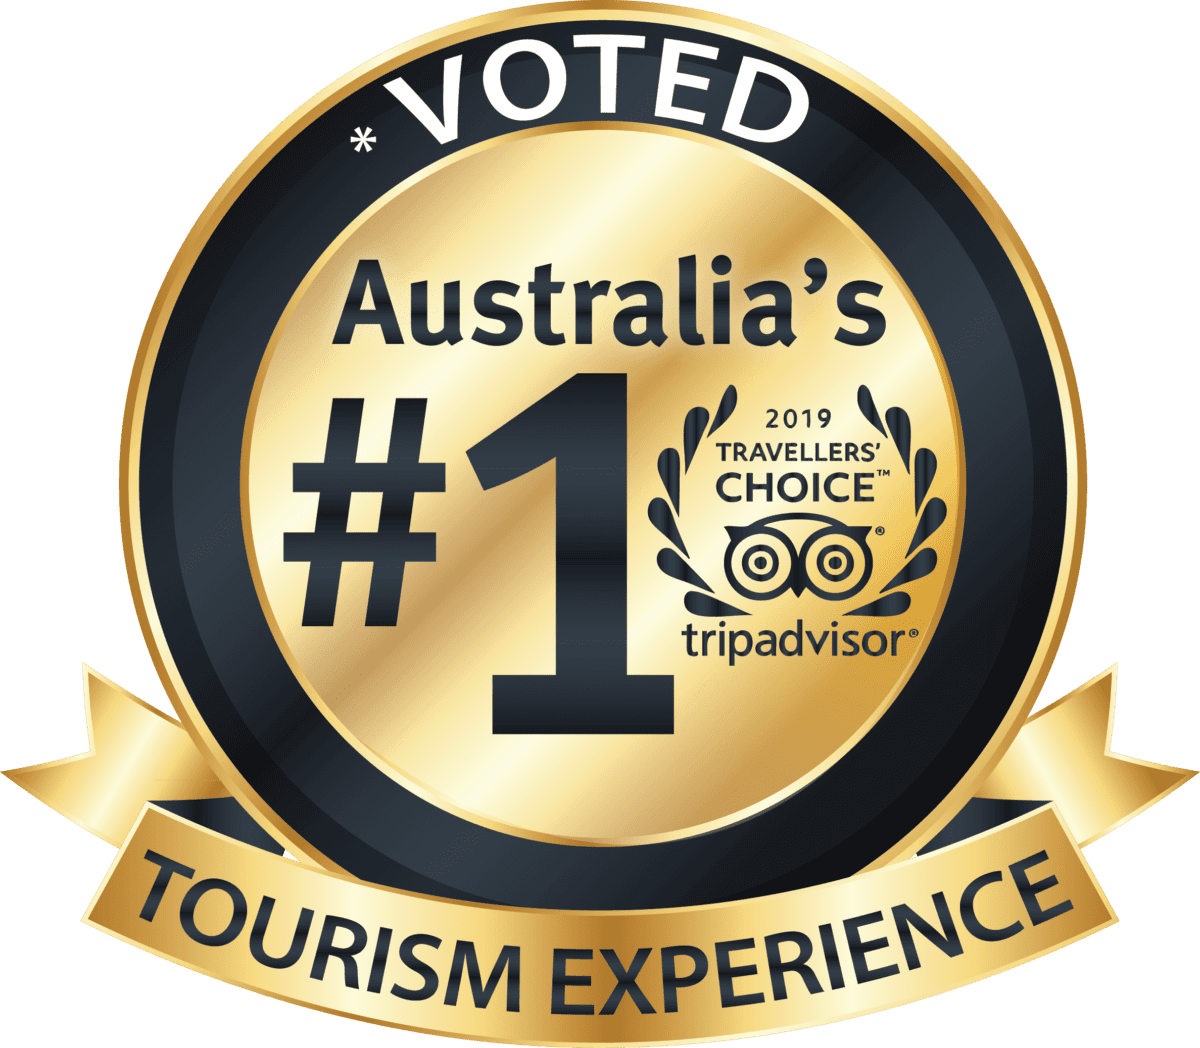 Australia's best tourism experience - Tripadvisor